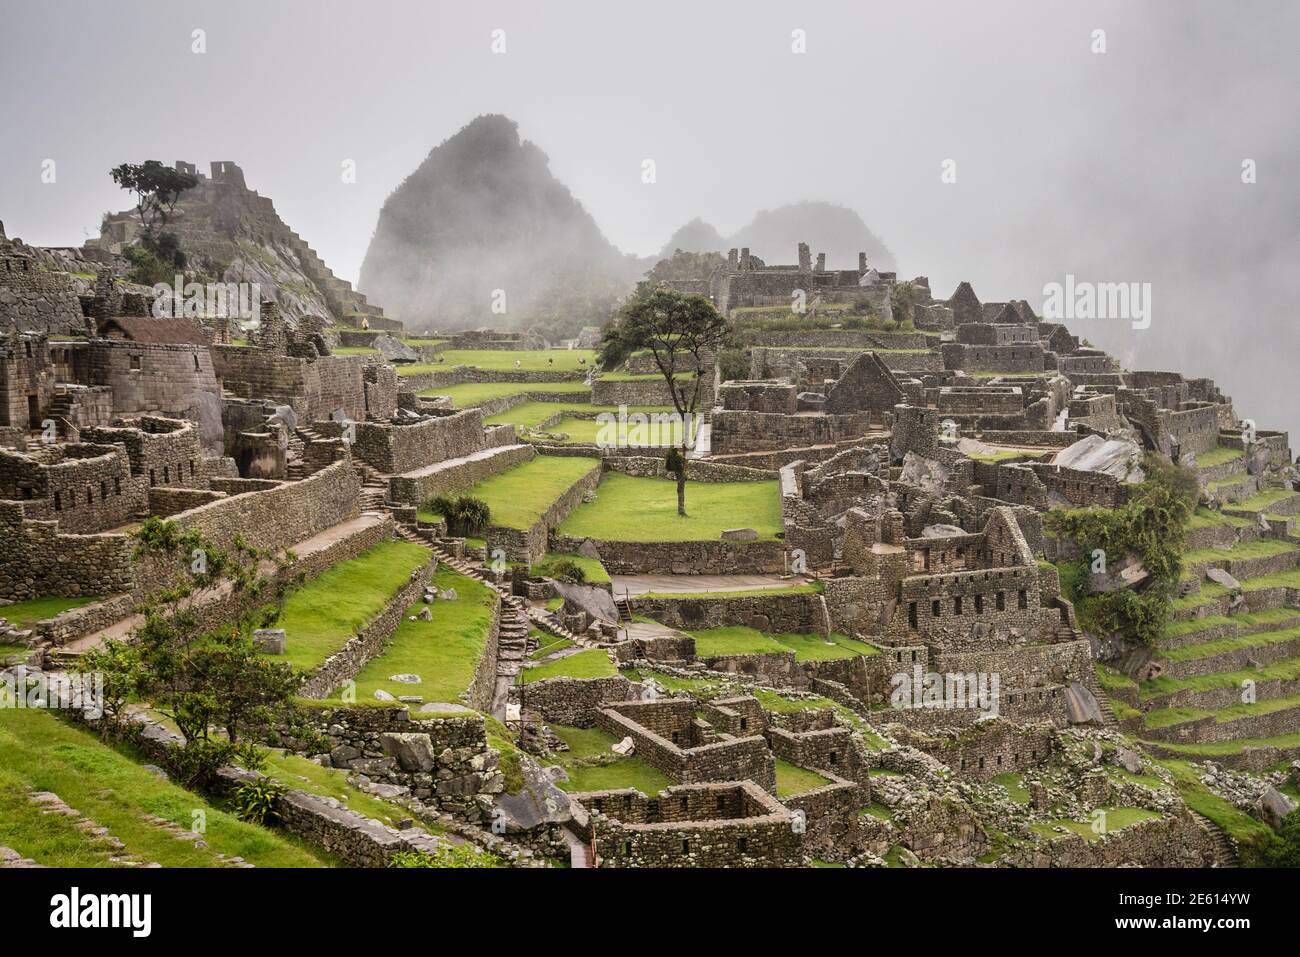 Rovine Inca a Machu Picchu, Perù in una giornata nebbiosa e nebbiosa. Foto Stock